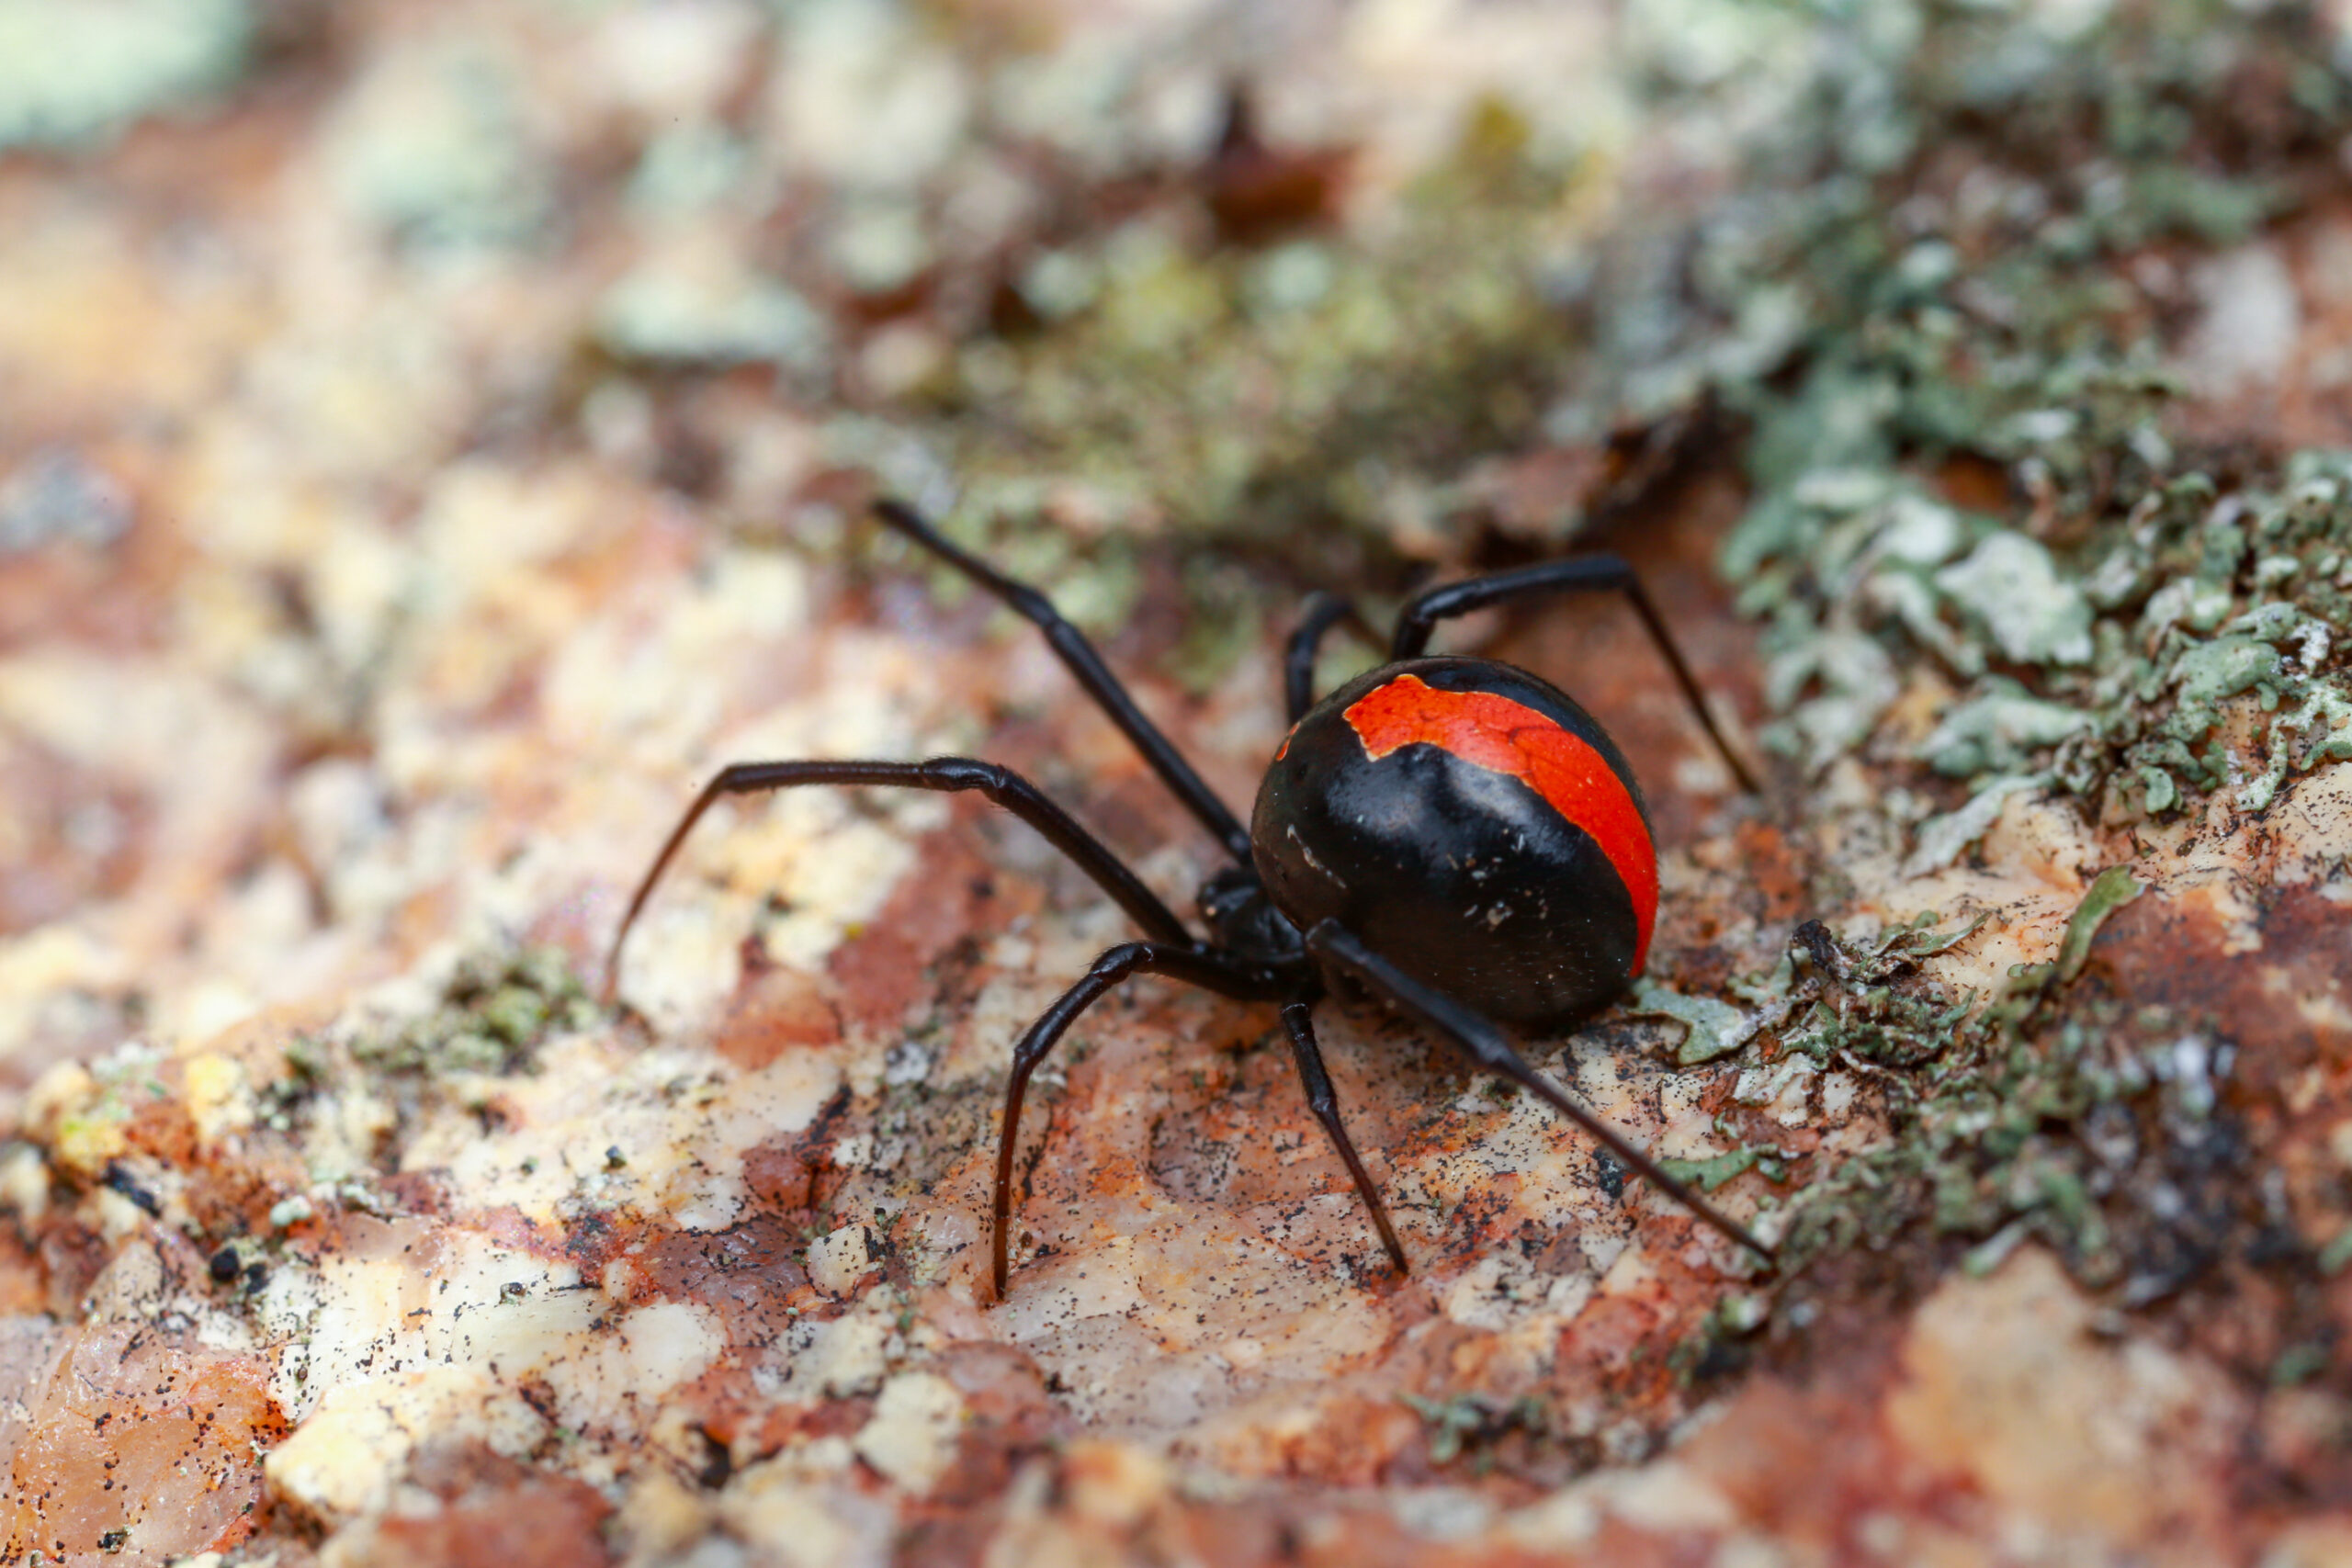 Red Back Spider Pest Control - Pest Control Sydney